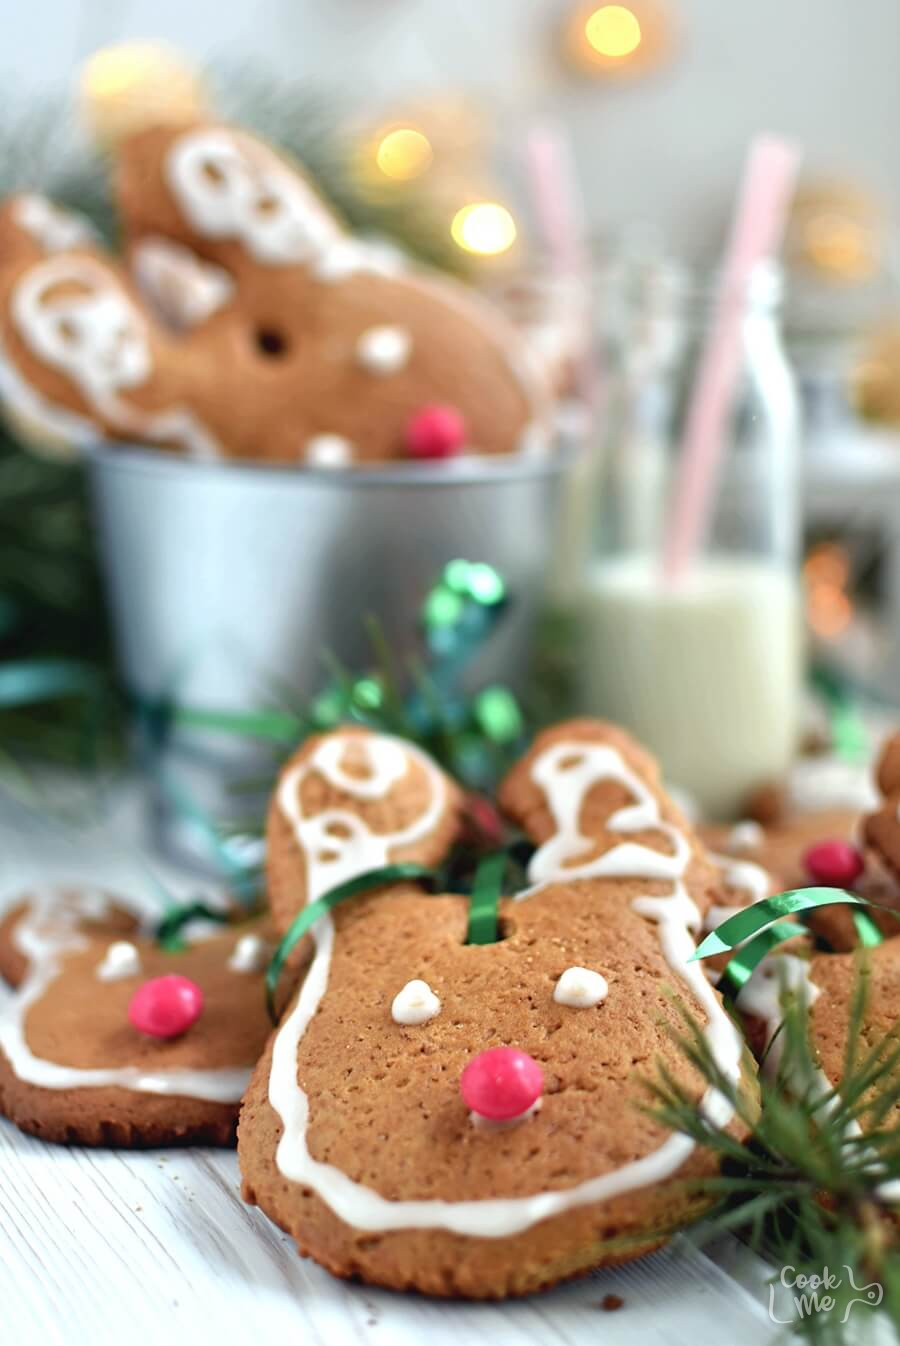 Gingerbread Reindeer Recipe Recipe - Cook.me Recipes